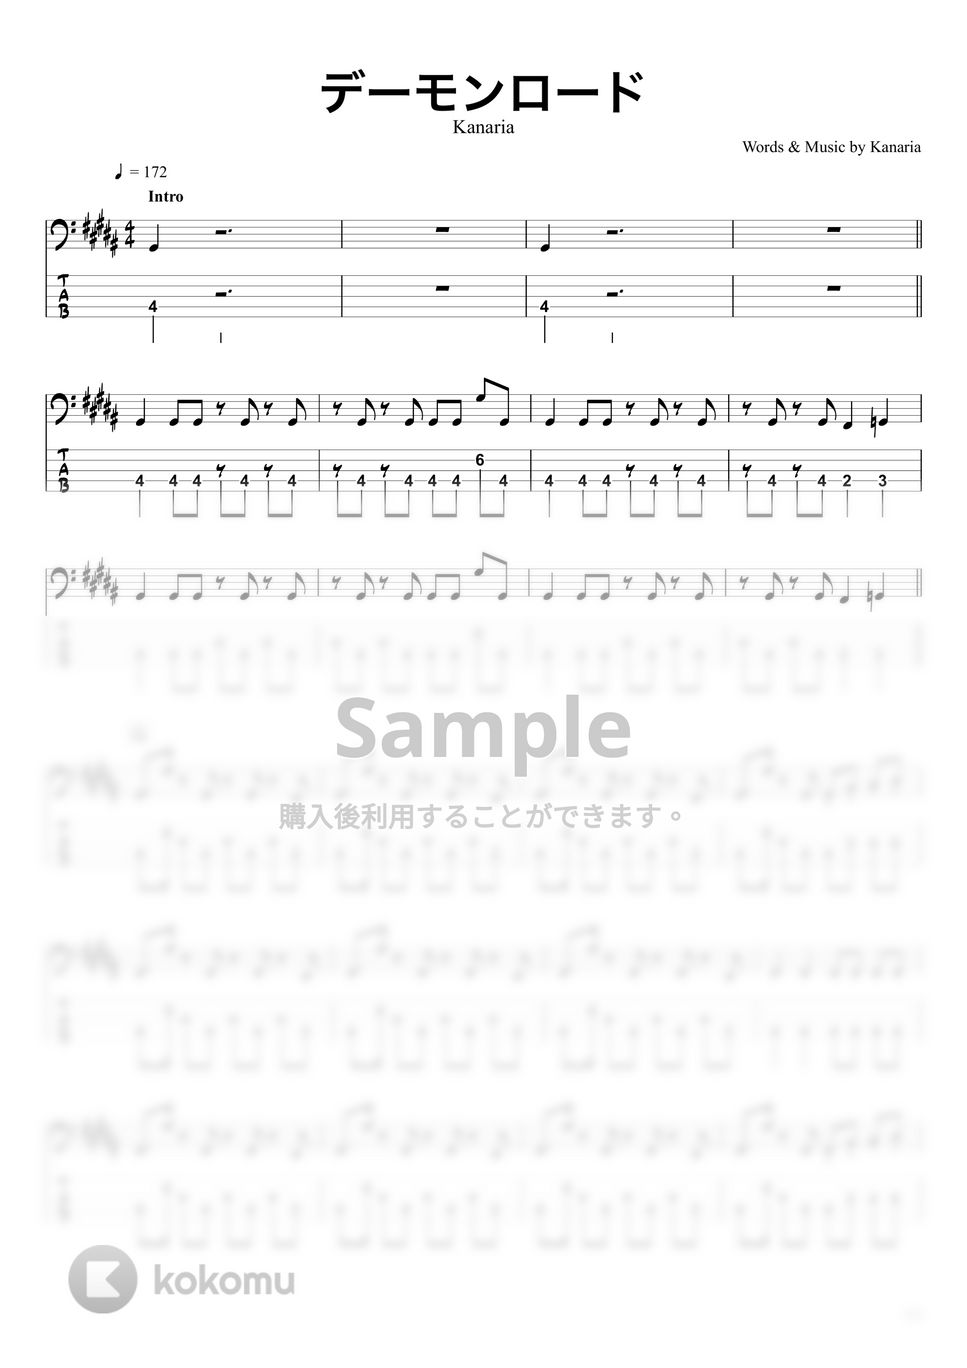 Kanaria - デーモンロード (ベースTAB譜☆5弦ベース対応) by swbass